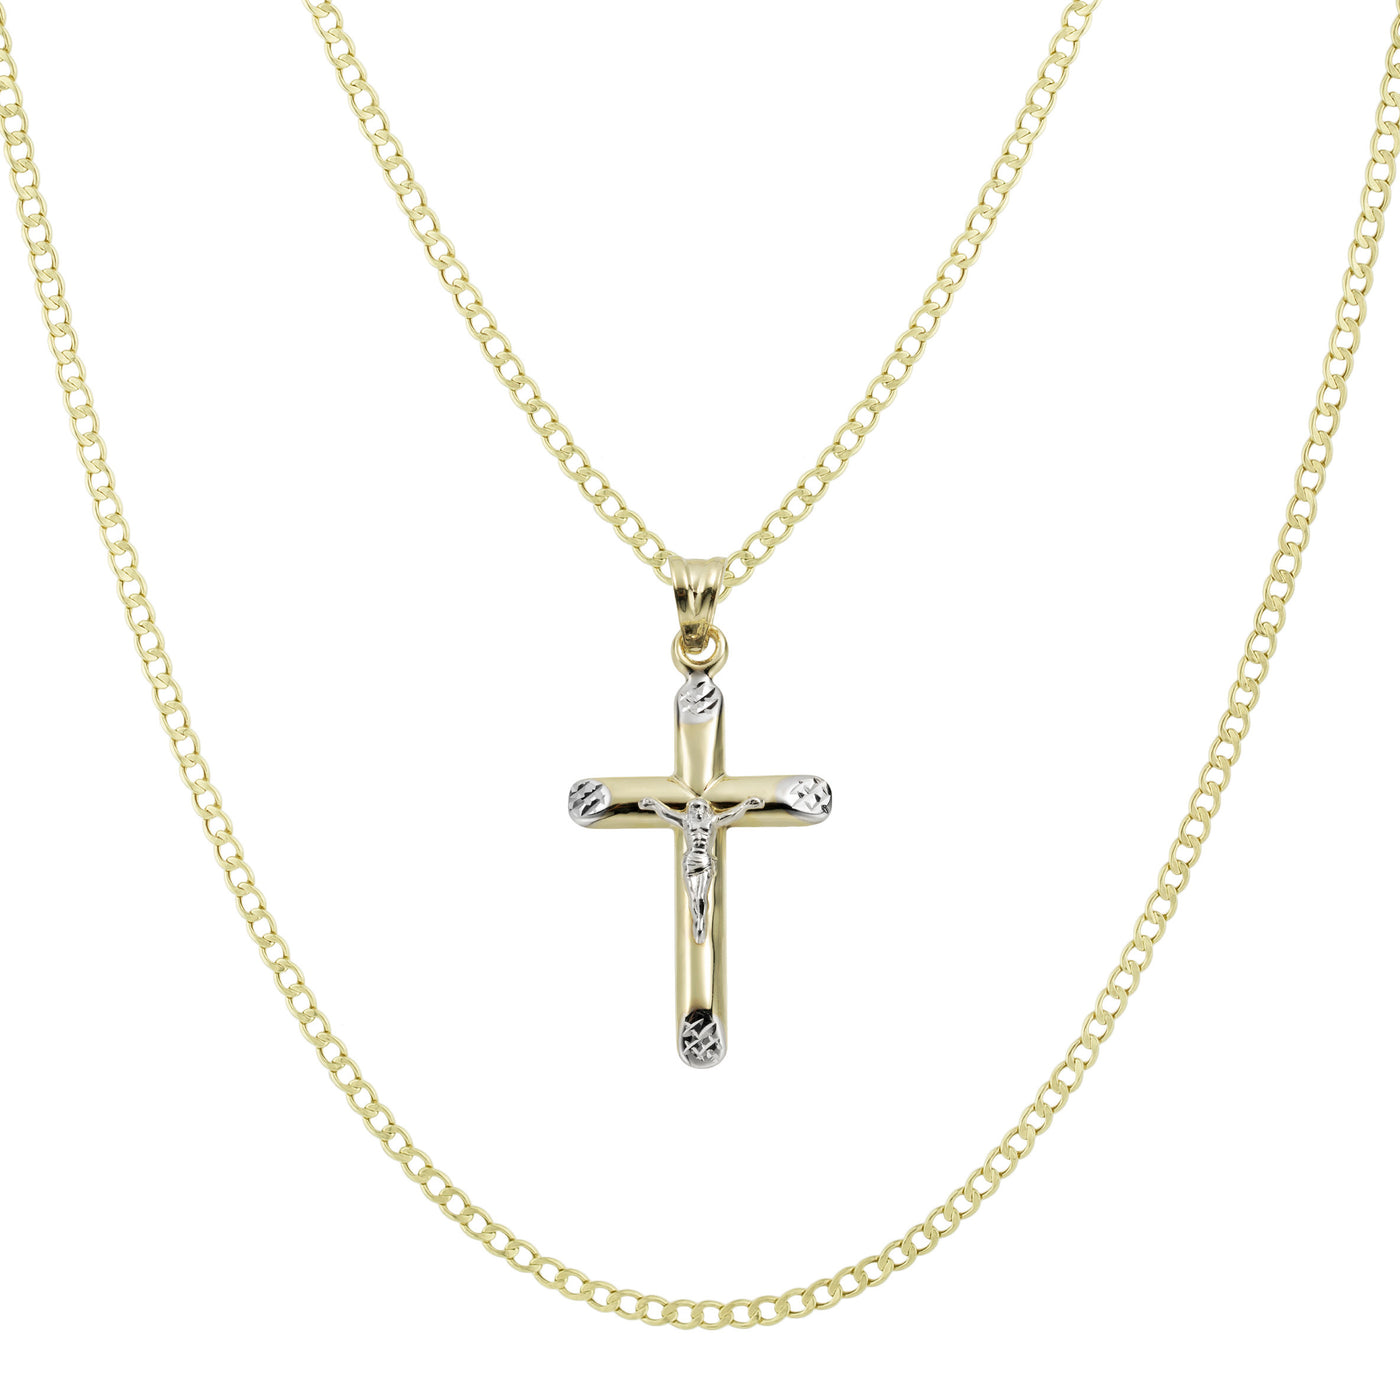 1 1/2" Diamond Cut Jesus Cross Crucifix Two-Tone Pendant & Chain Necklace Set 10K Yellow White Gold